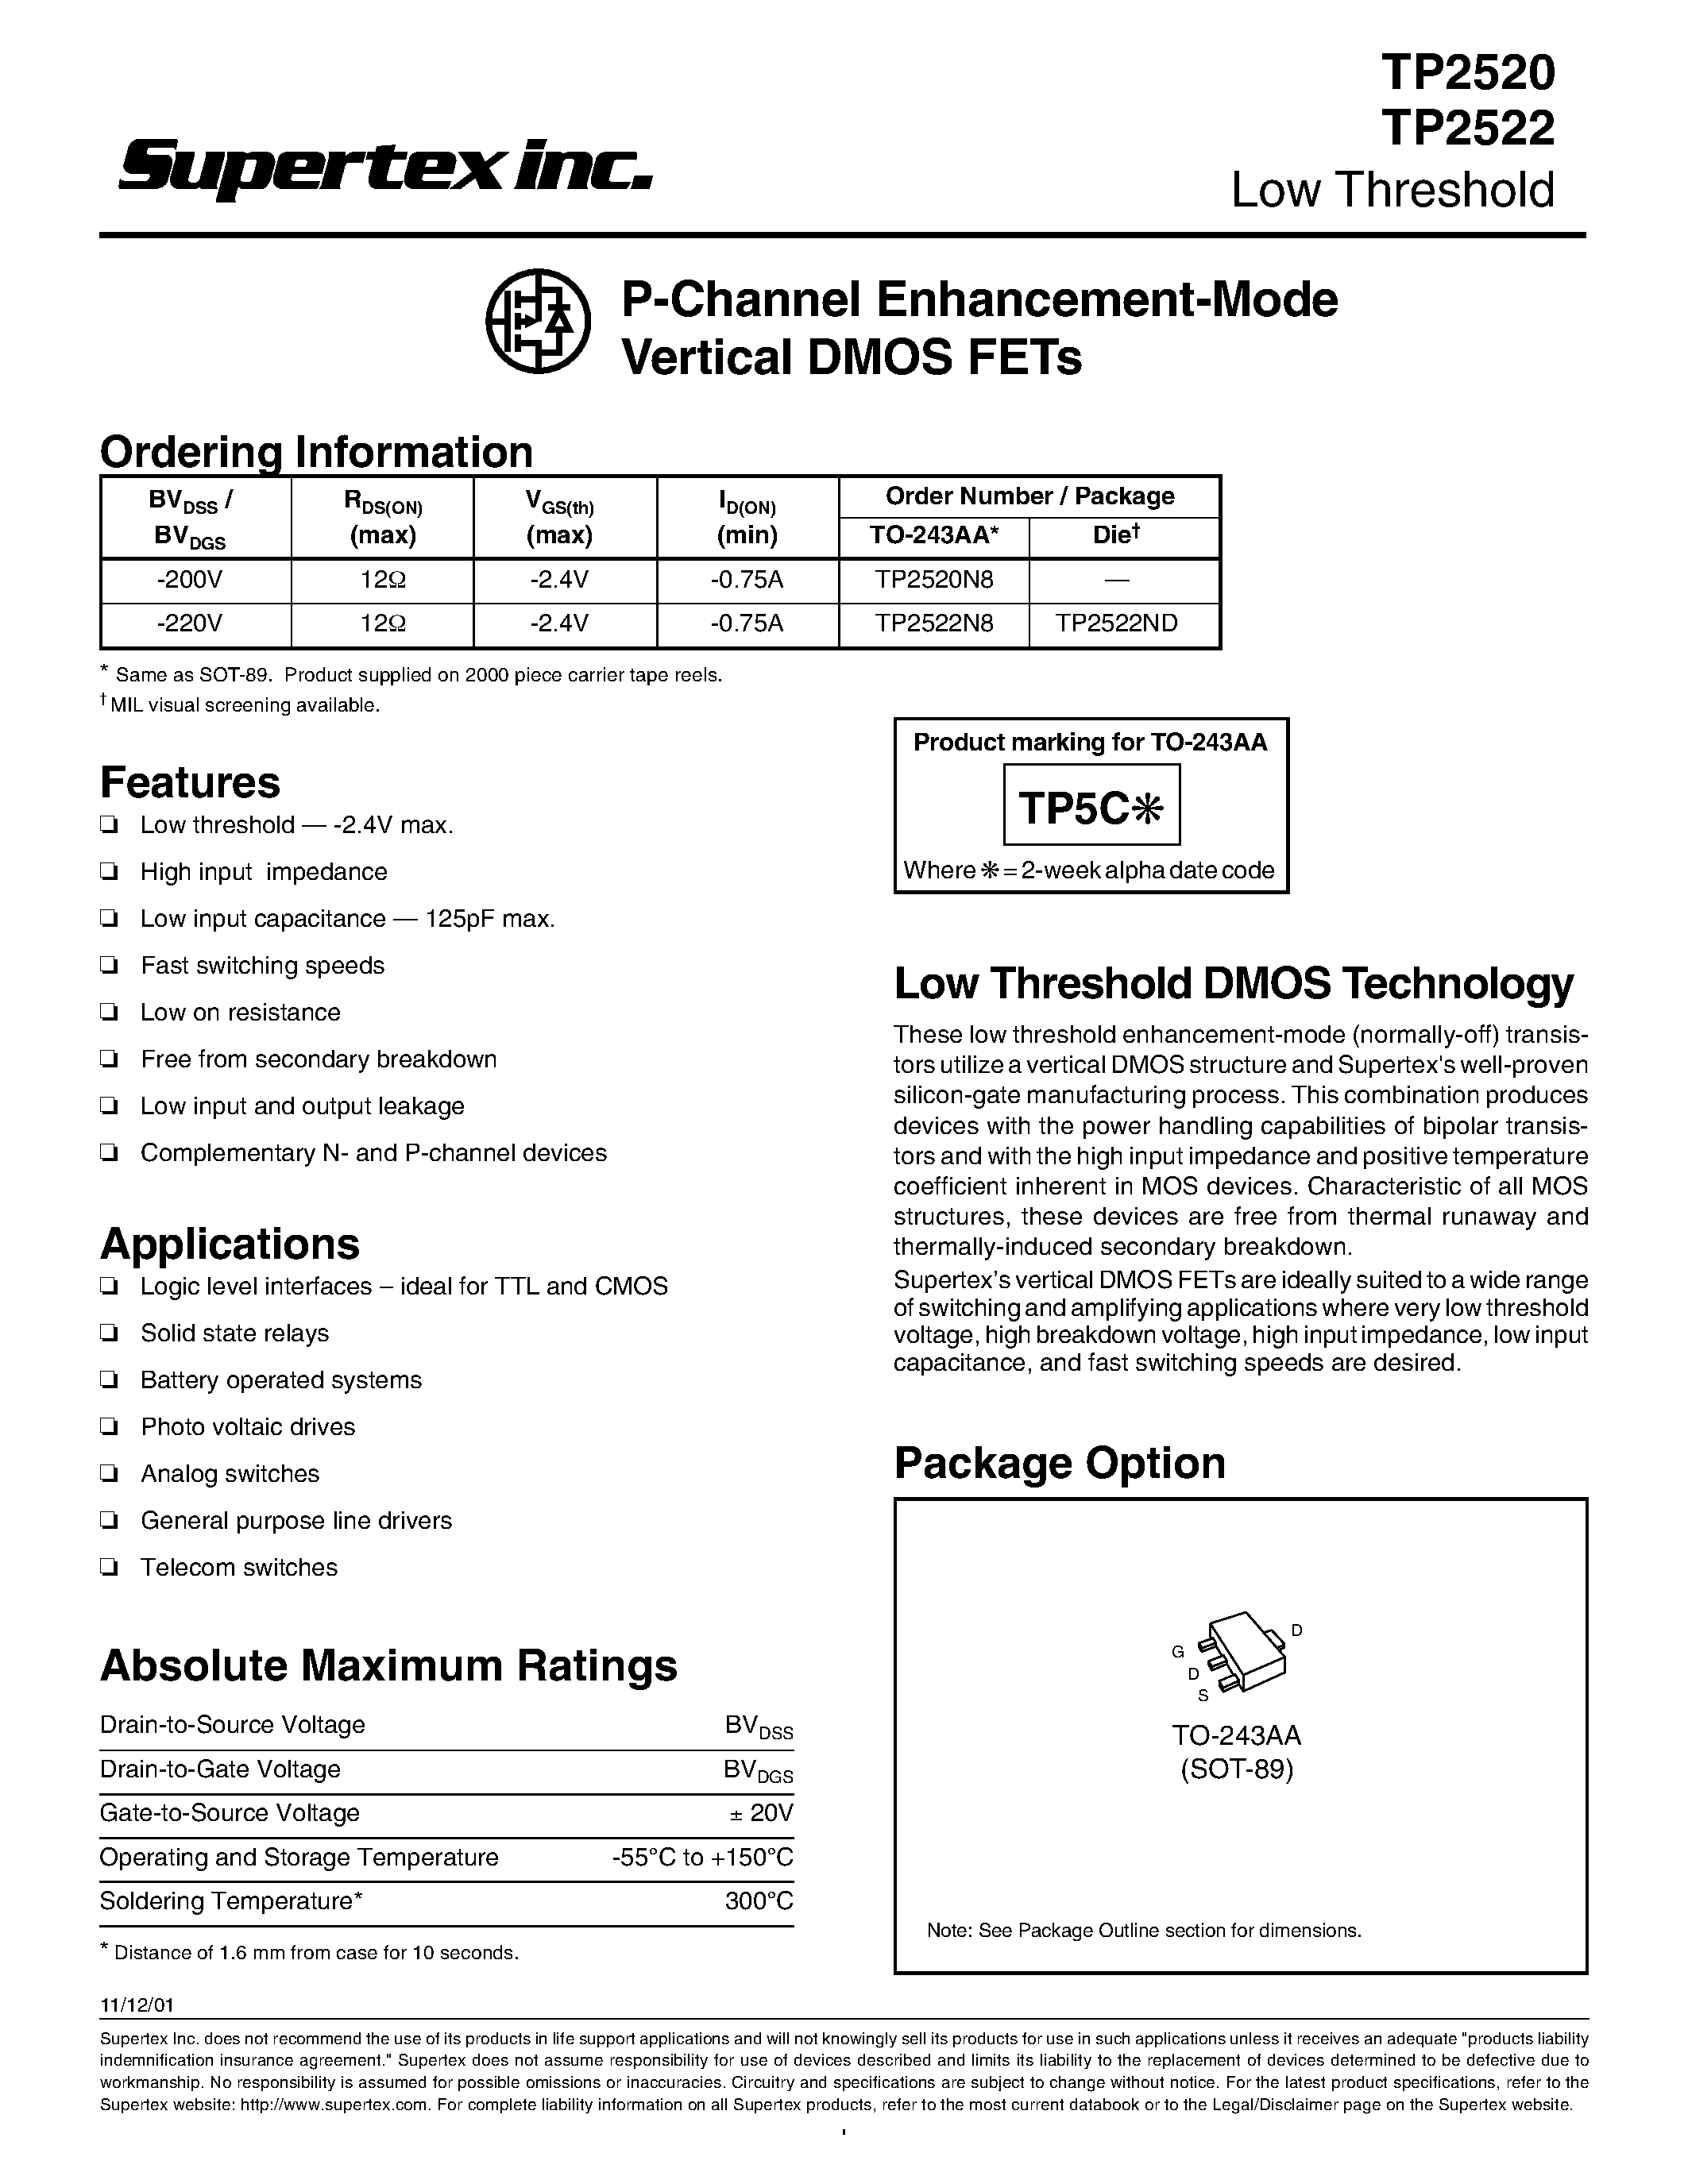 Datasheet TP2522ND - P-Channel Enhancement-Mode Vertical DMOS FETs page 1